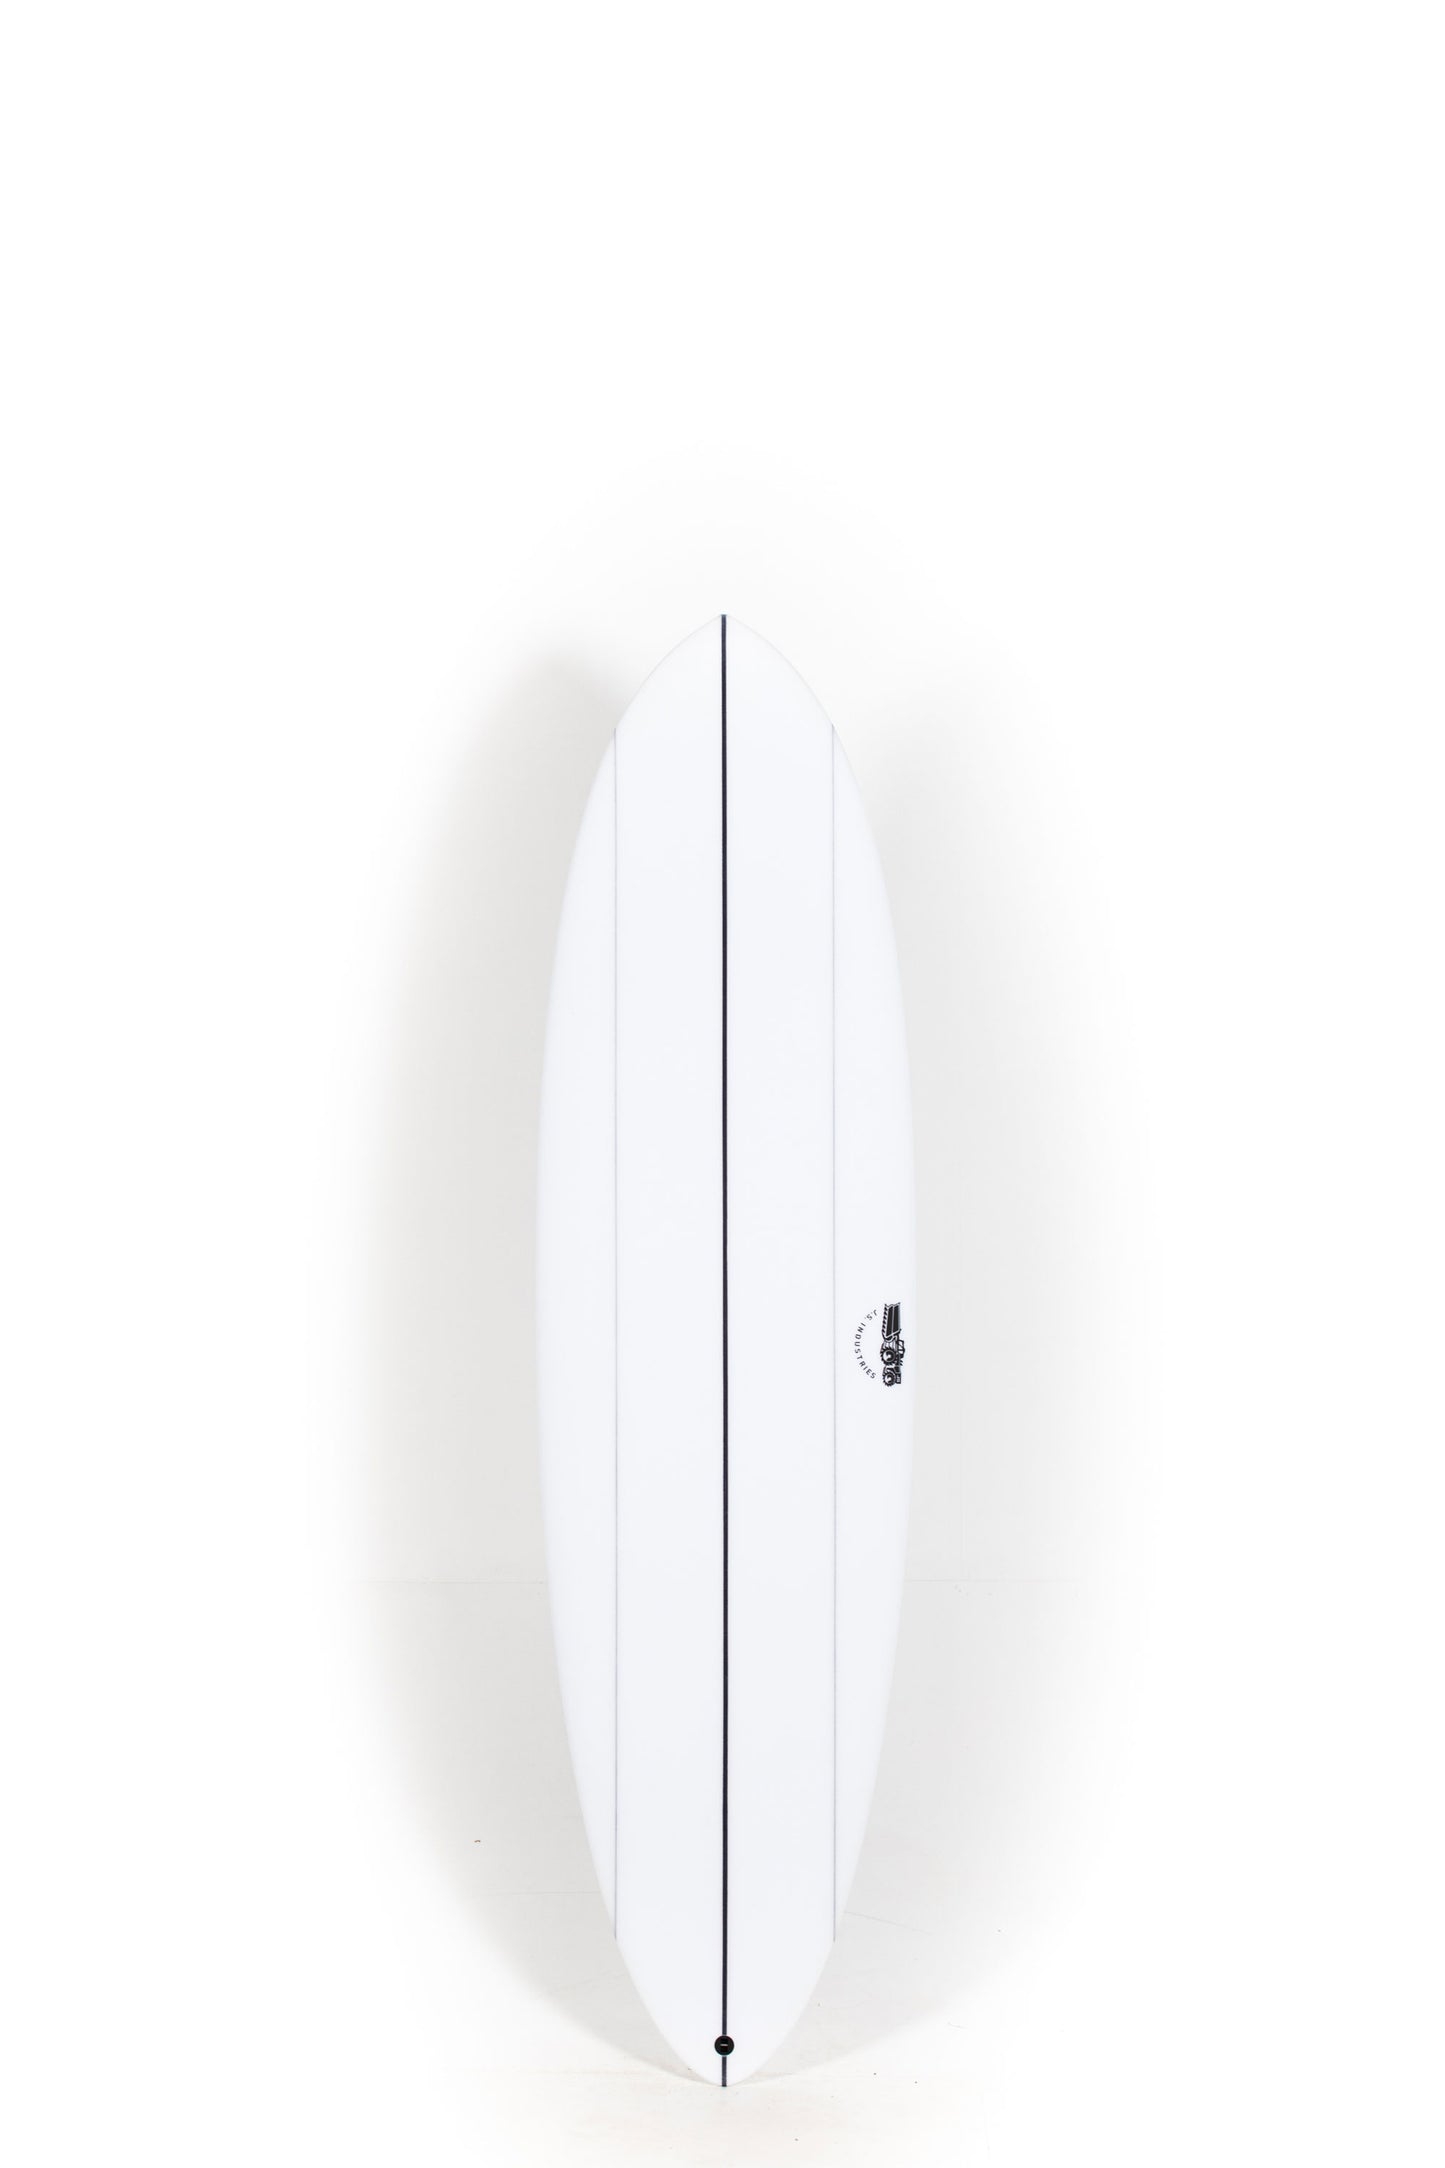 Pukas Surf Shop - JS Surfboards - BIG BARON - 6'4" x 20 x 2,56 x 34,3L. - BIGBARON